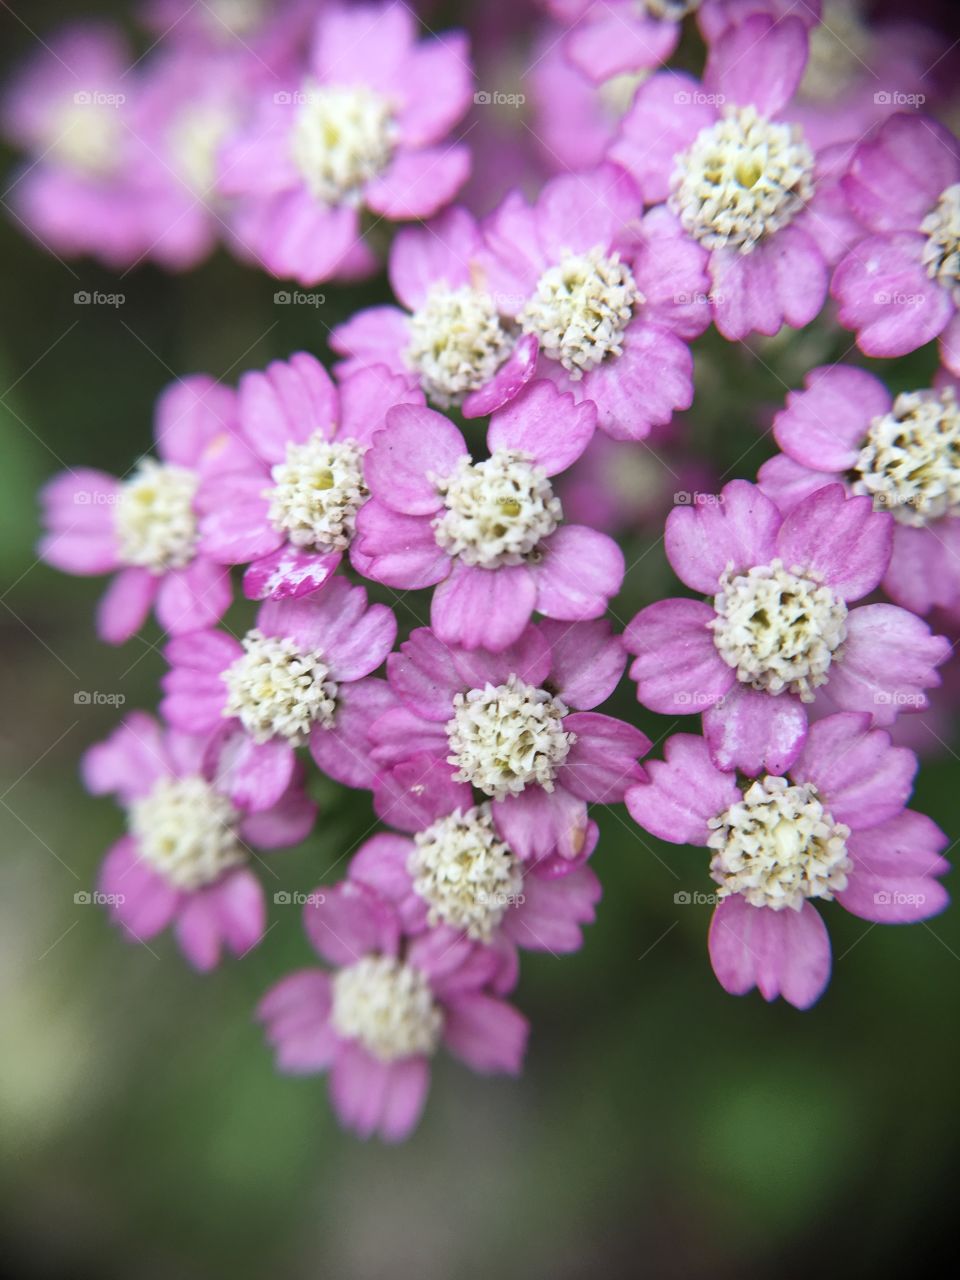 Tiny flower cluster